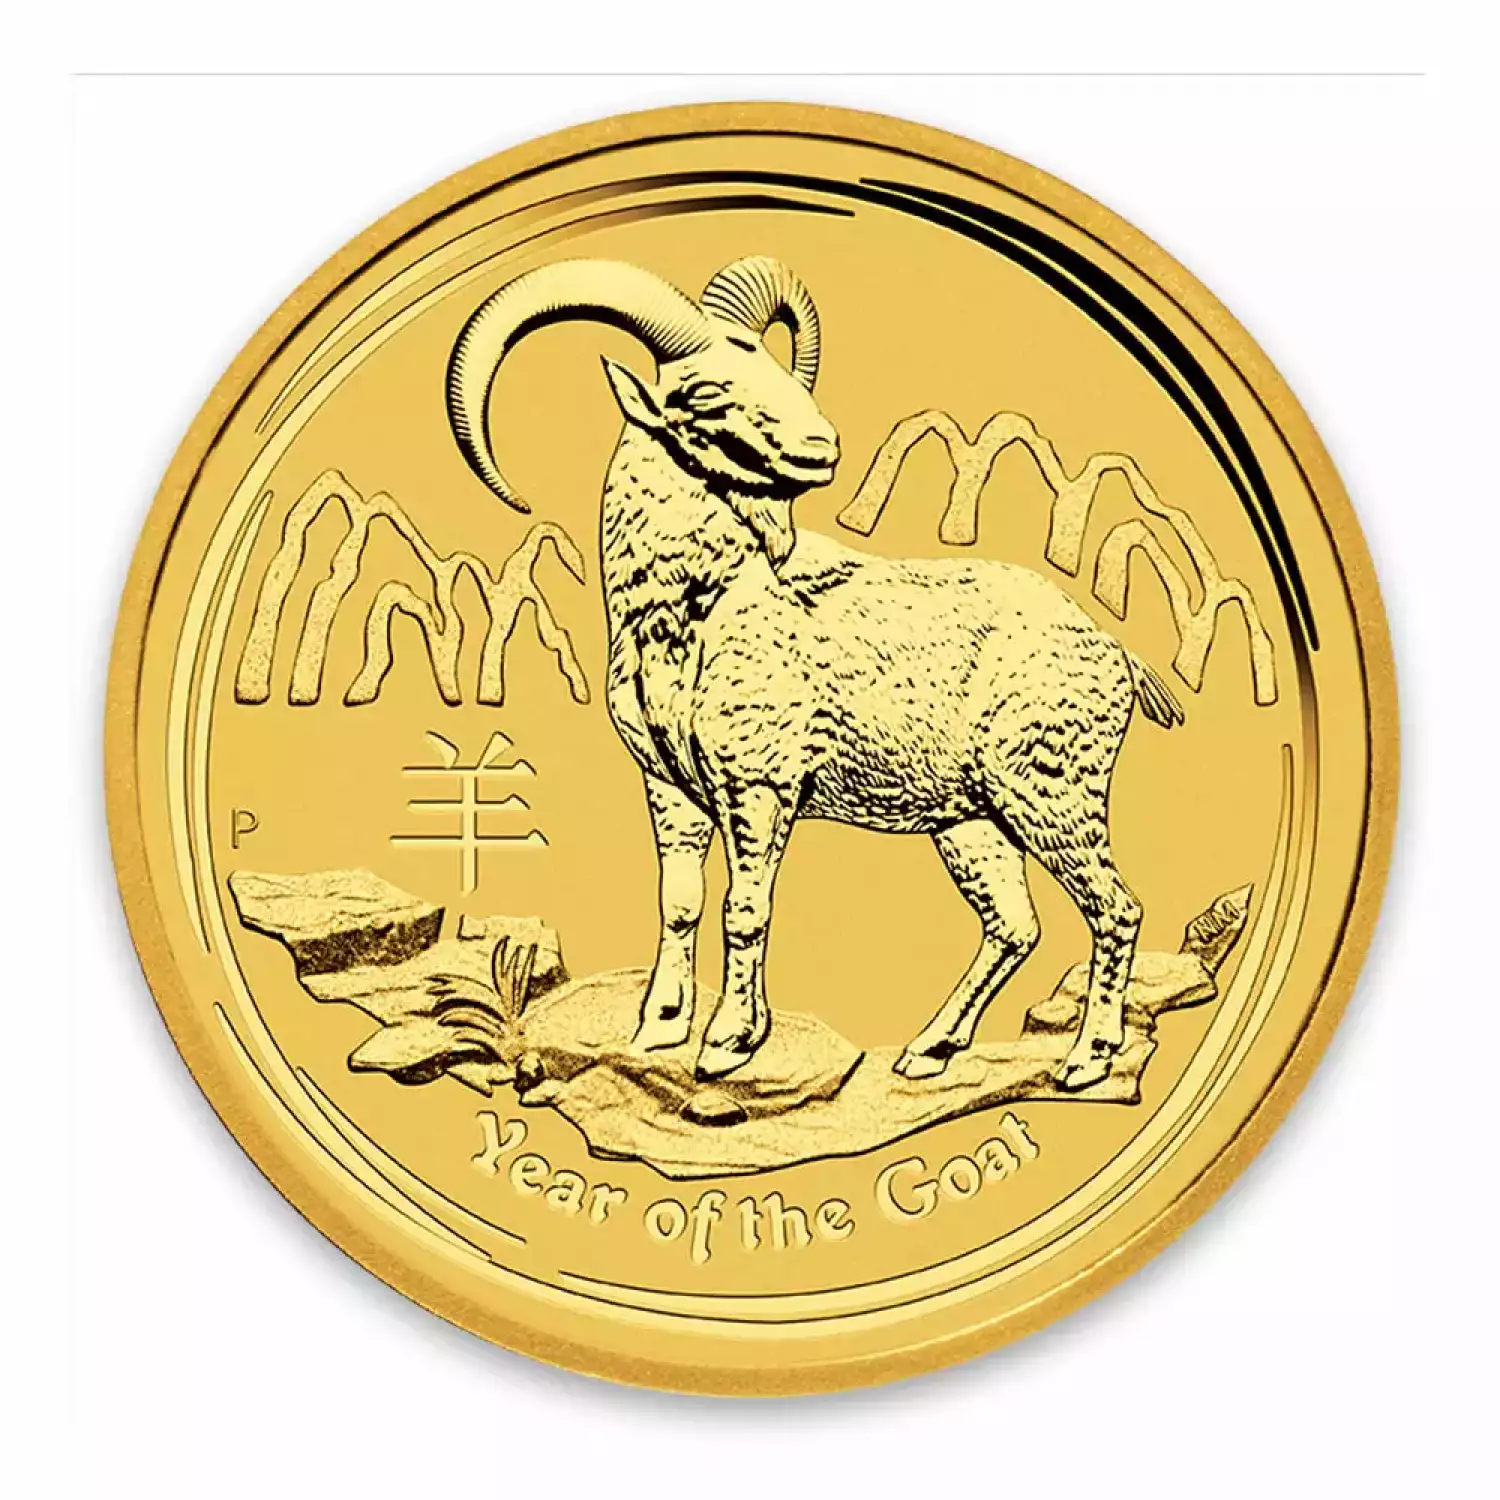 2015 2 oz Australian Perth Mint Gold Lunar II: Year of the Goat (3)